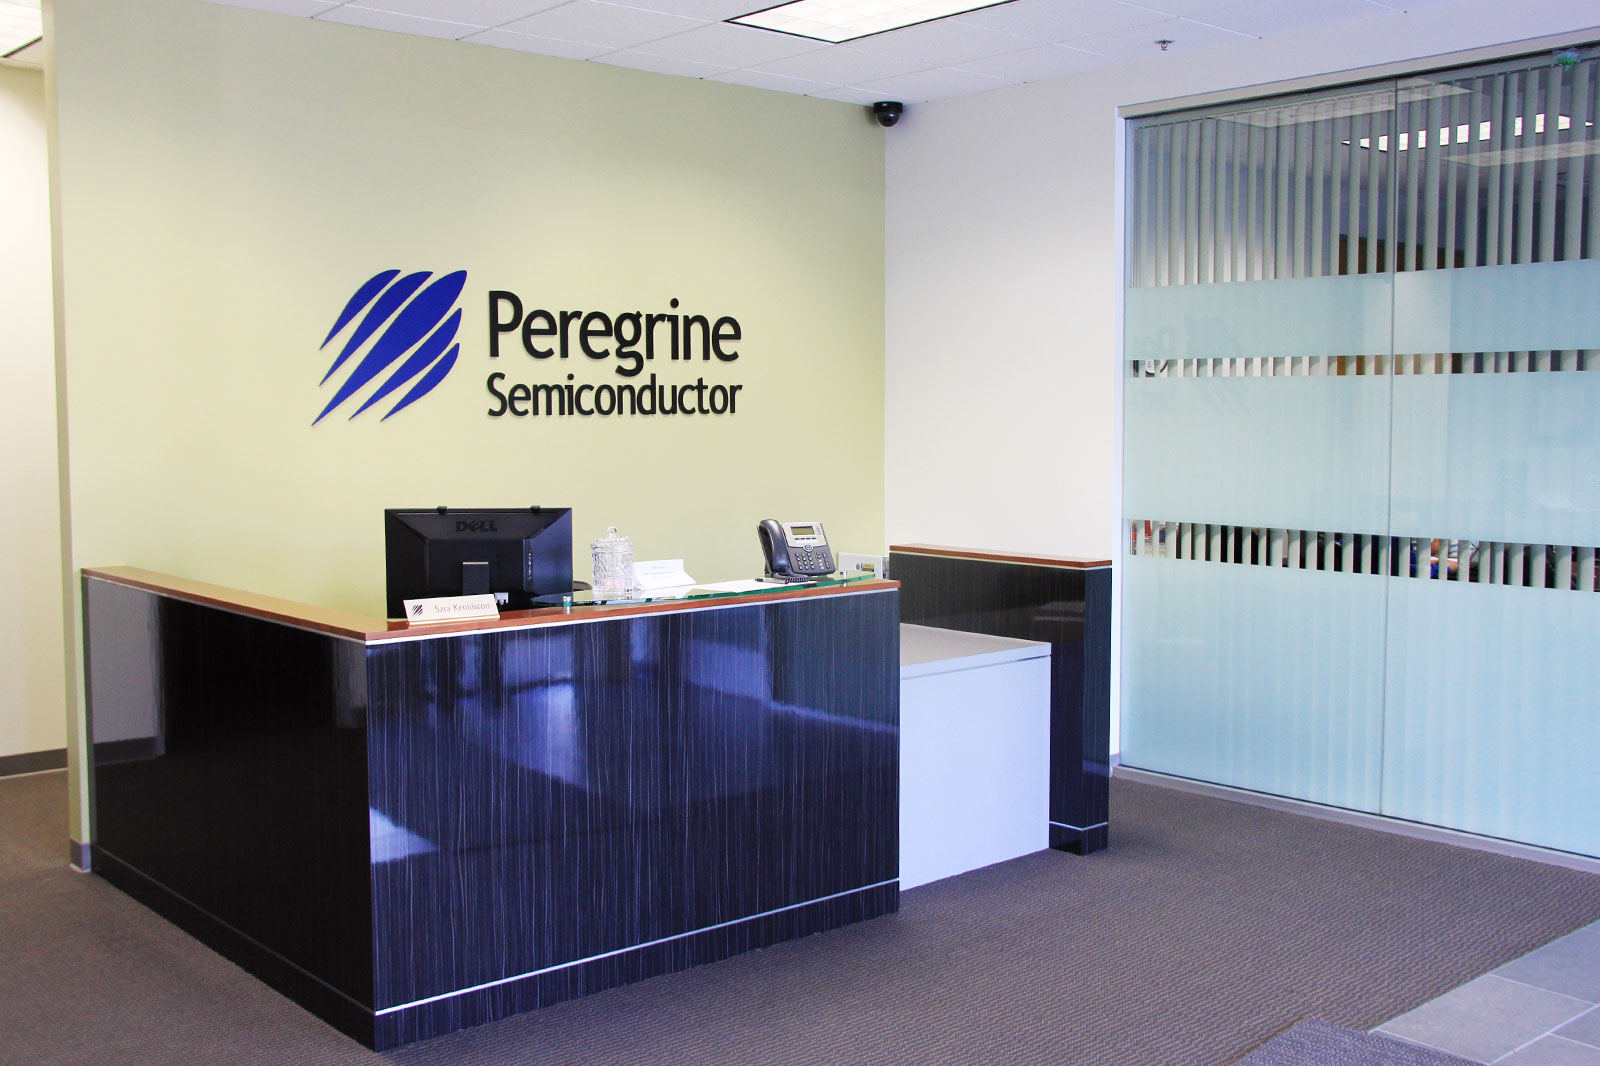 Peregrine Semiconductor reception desk